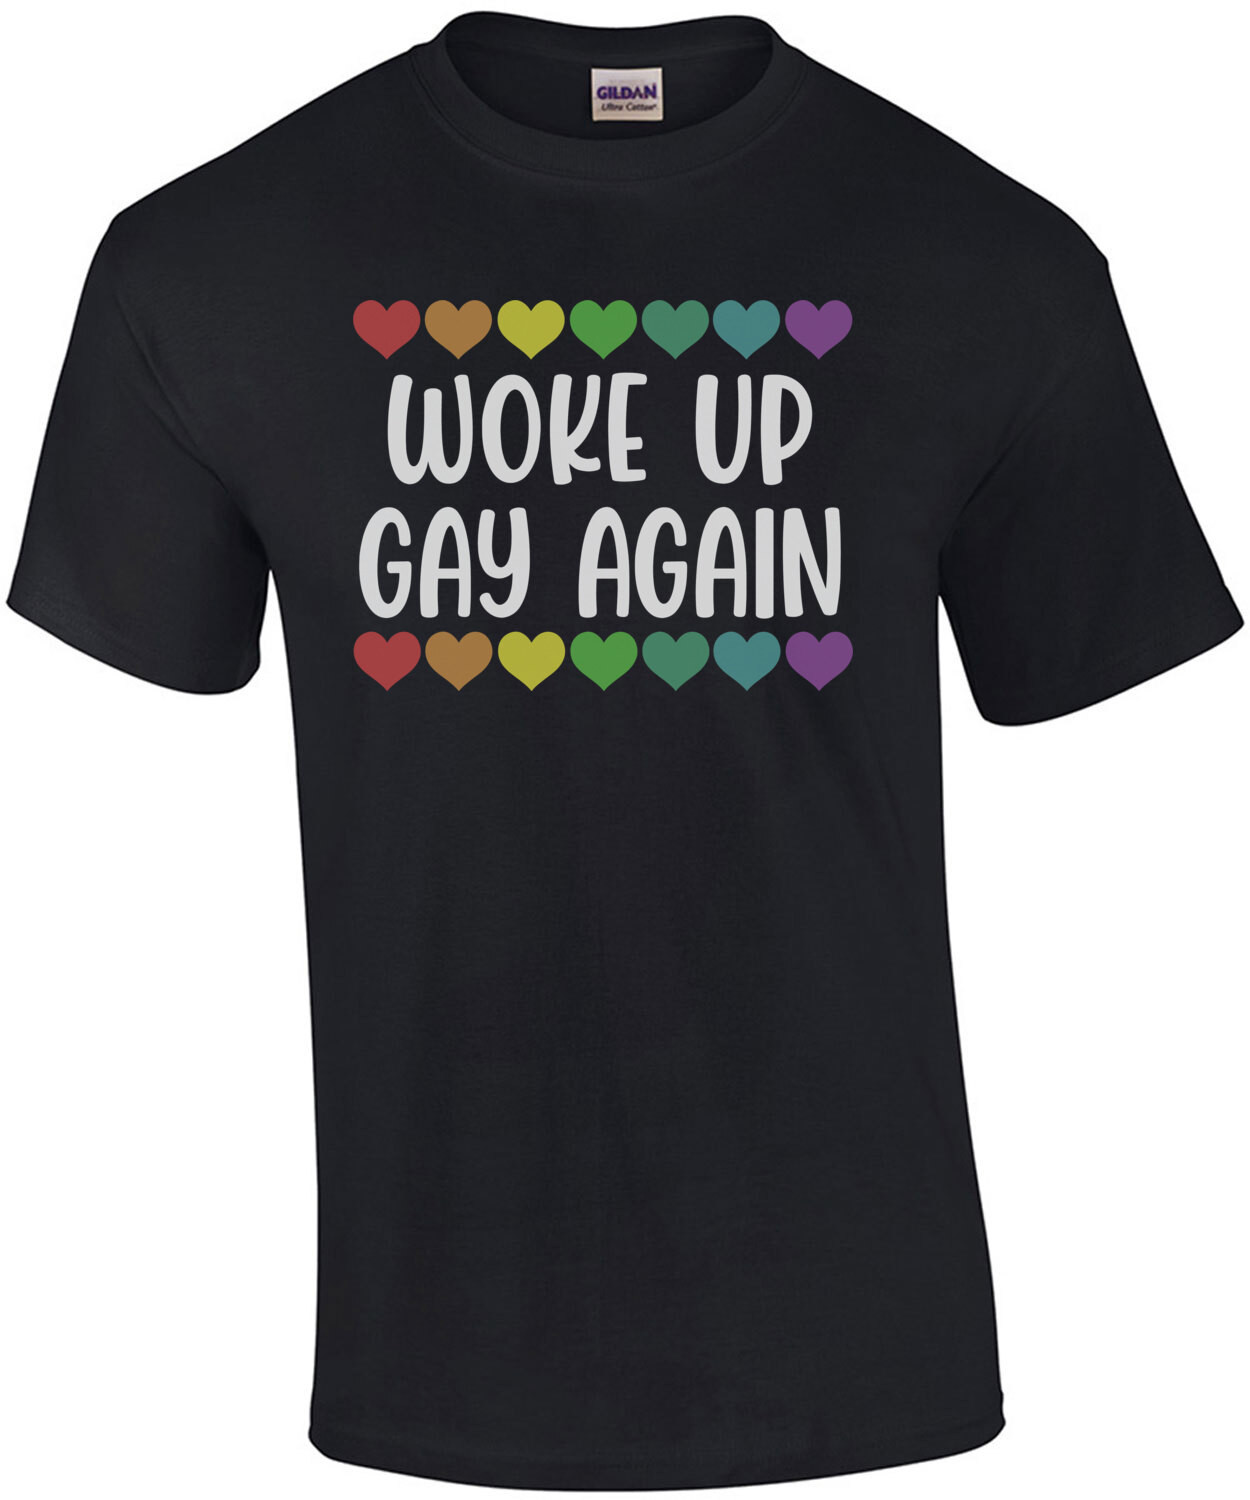 Woke Up Gay Again. Gay Pride LGBTQ T-Shirt 